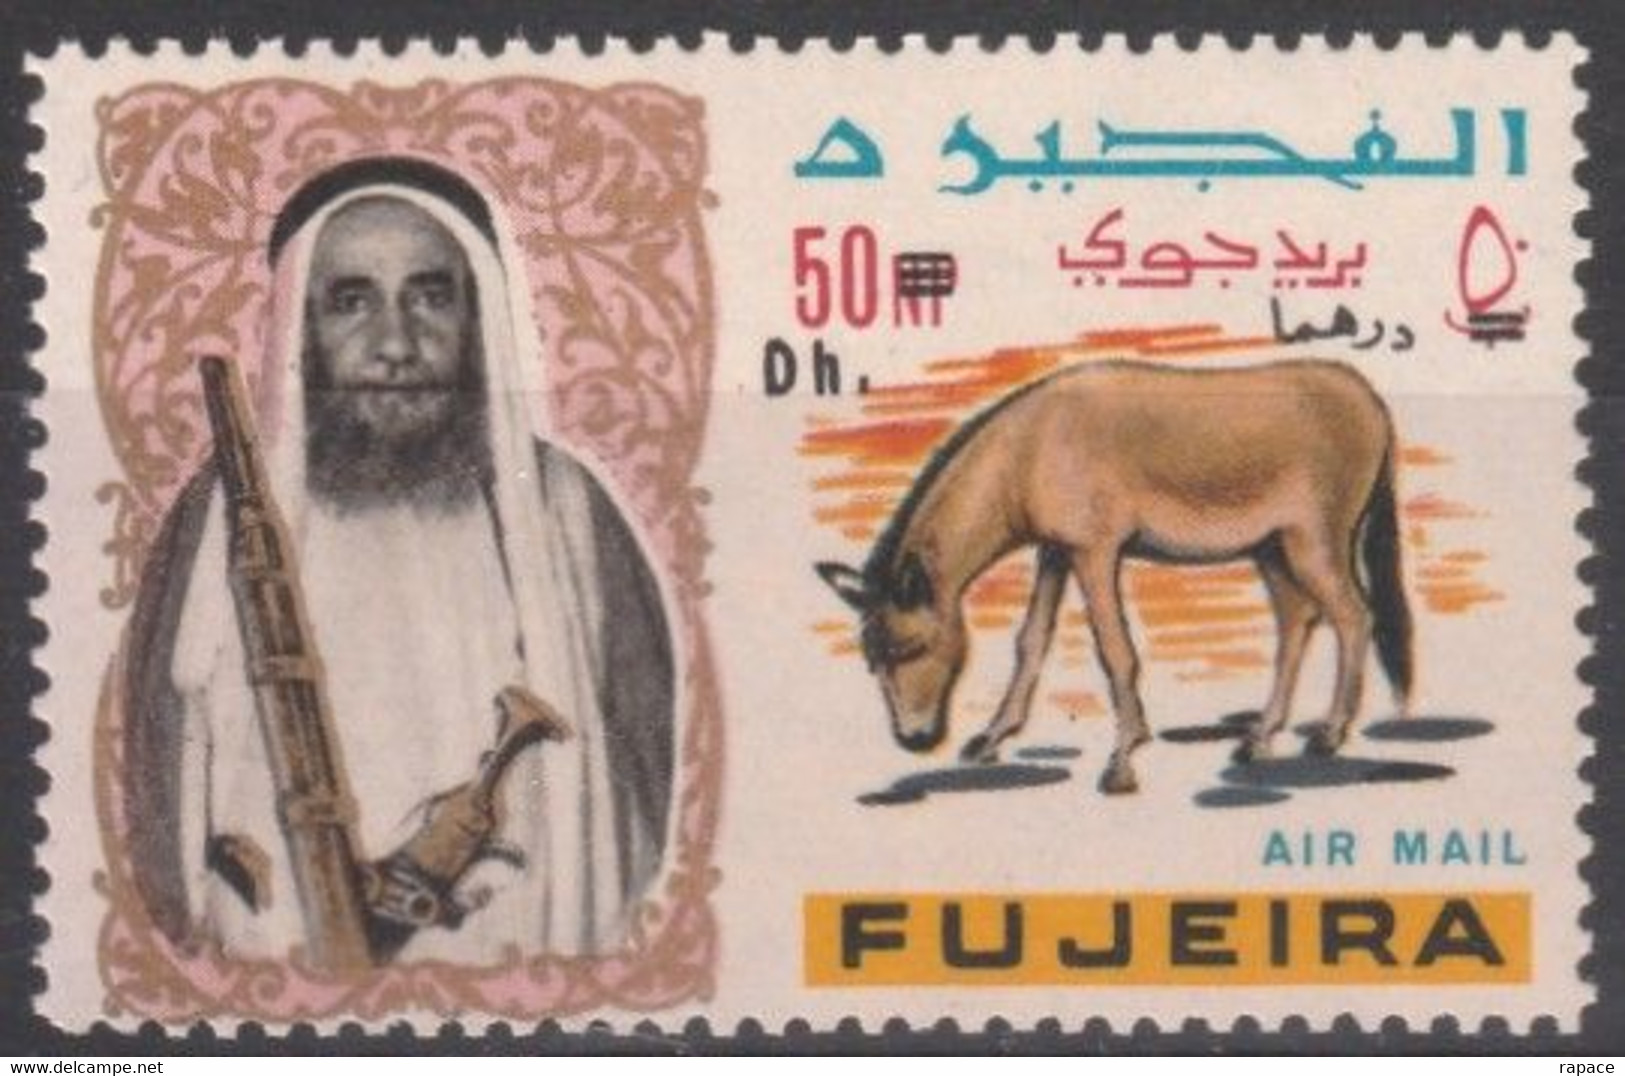 Fujeira 1967 Timbre Surchargé - Onagre De Perse (Equus Hemionus Onager) - Anes